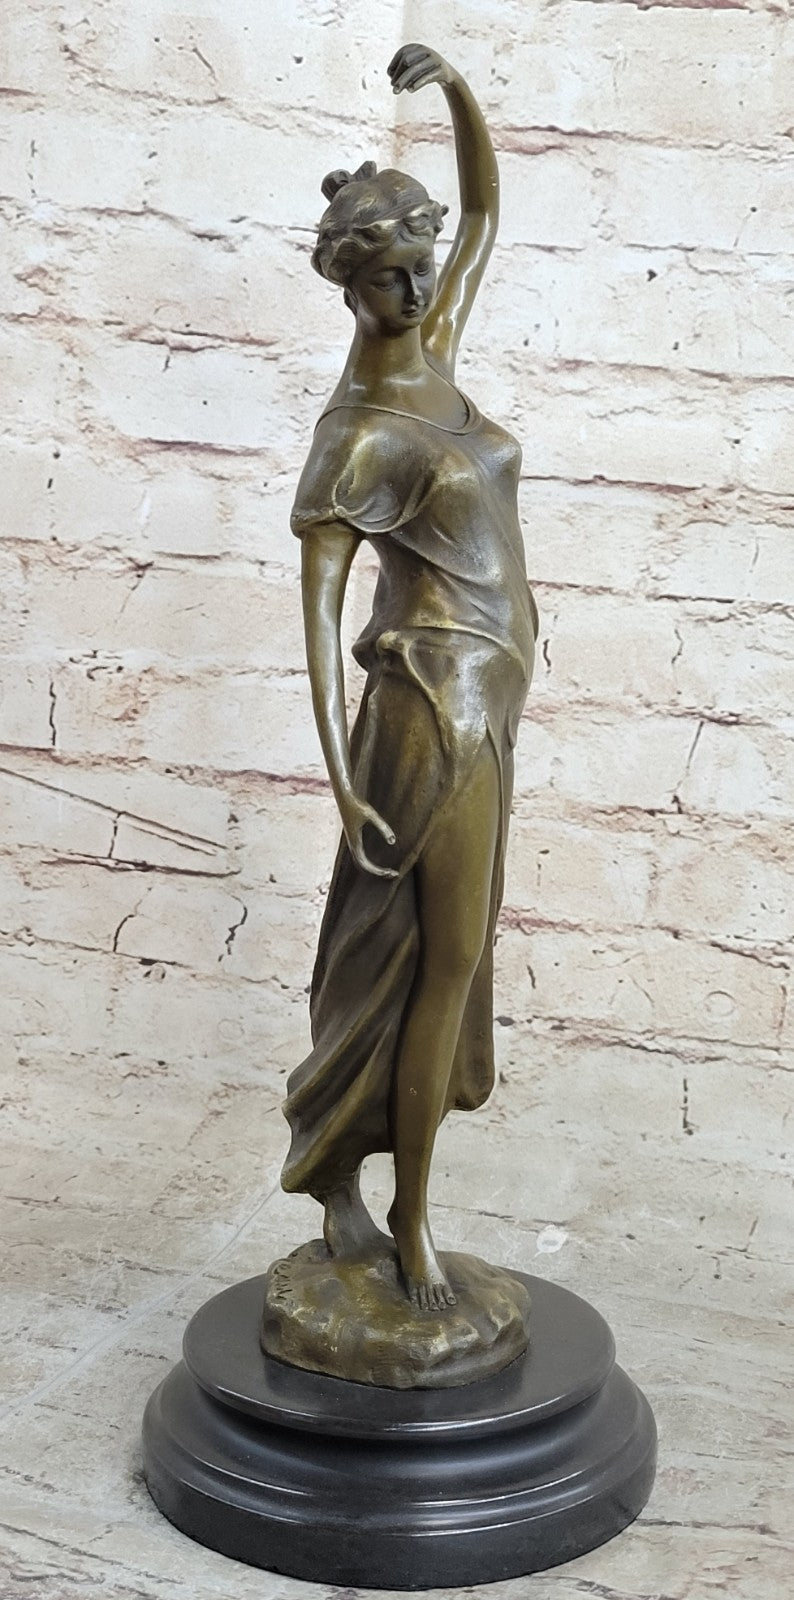 Signed Augustine Moreau French Artist Beautiful Woman Bronze Sculpture Figure